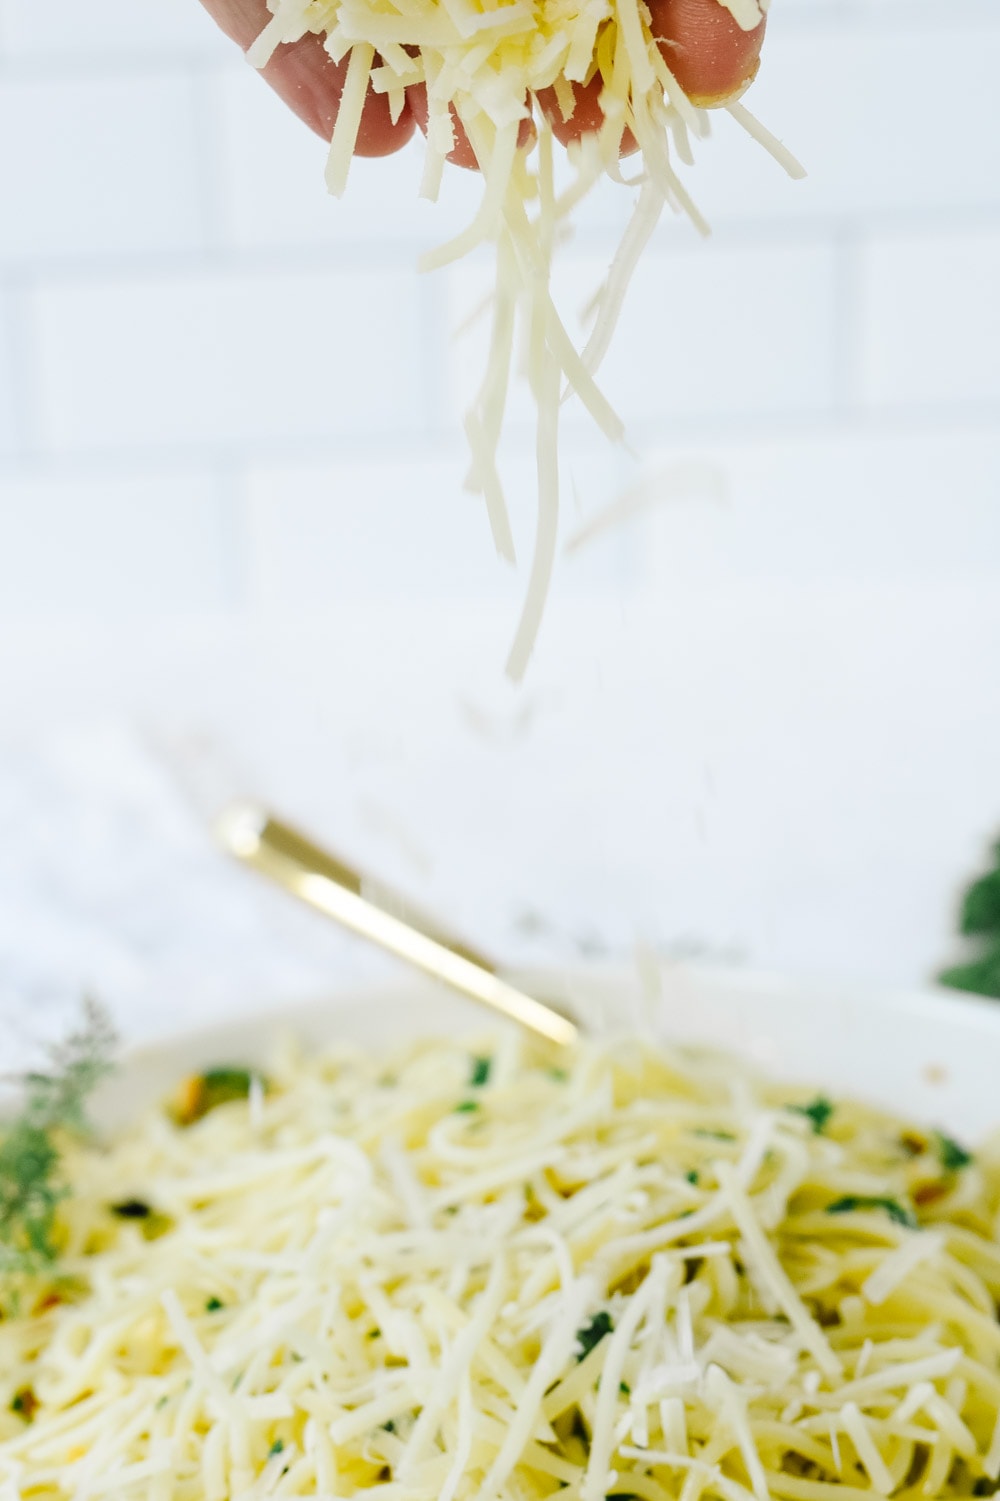 Adding parmesan cheese to pasta